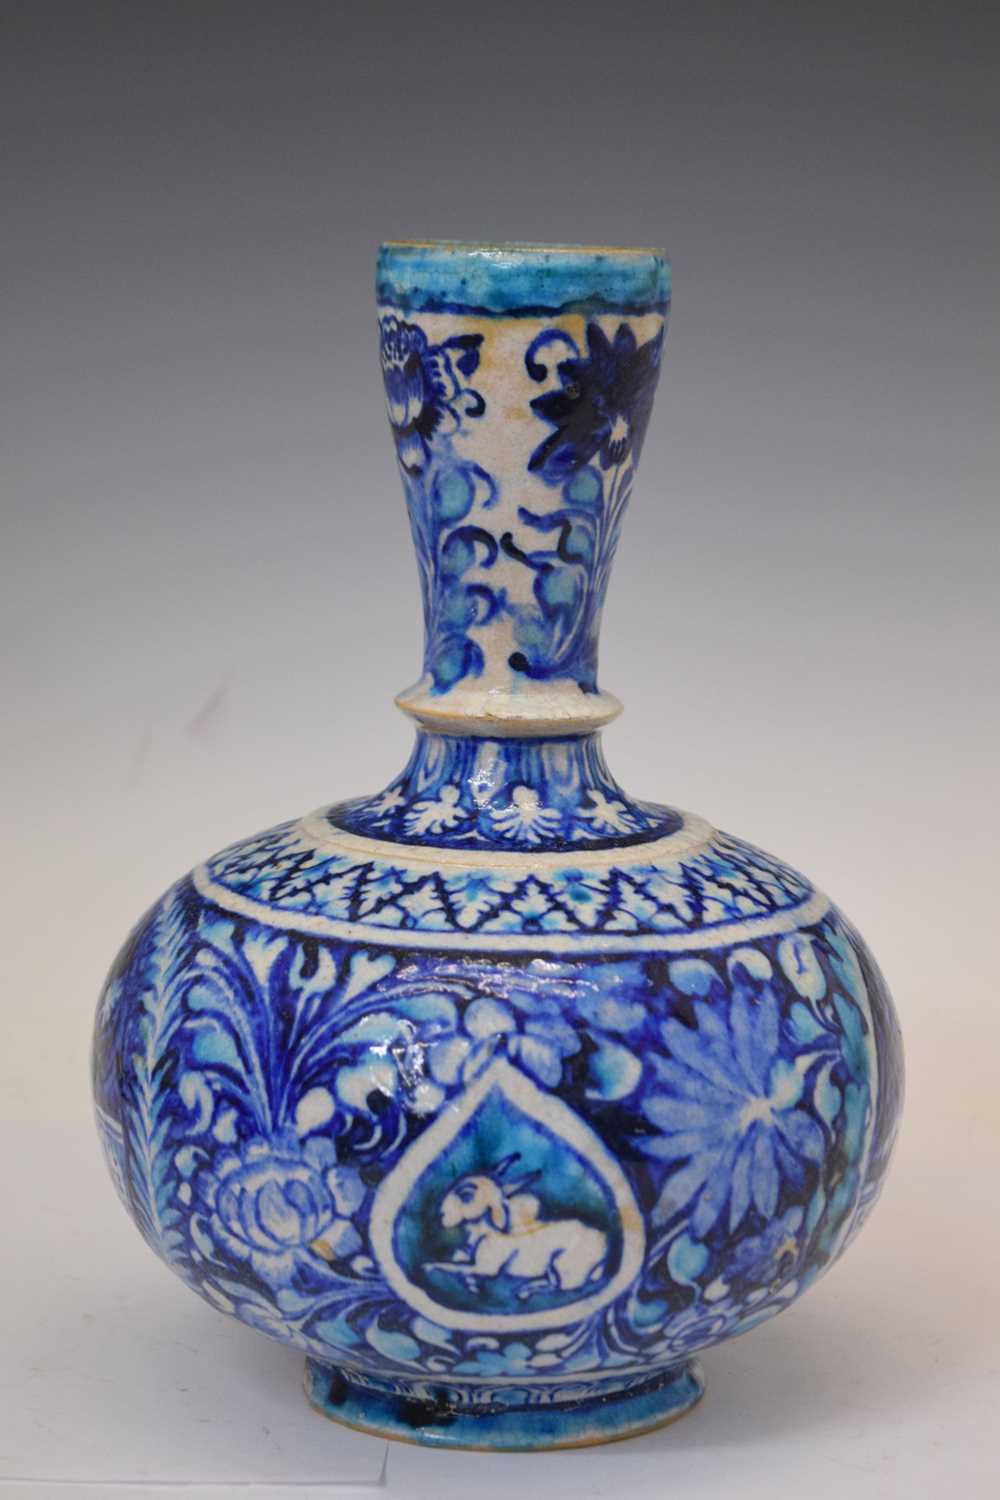 Pakistani blue and white vase, possibly Multan - Image 3 of 9